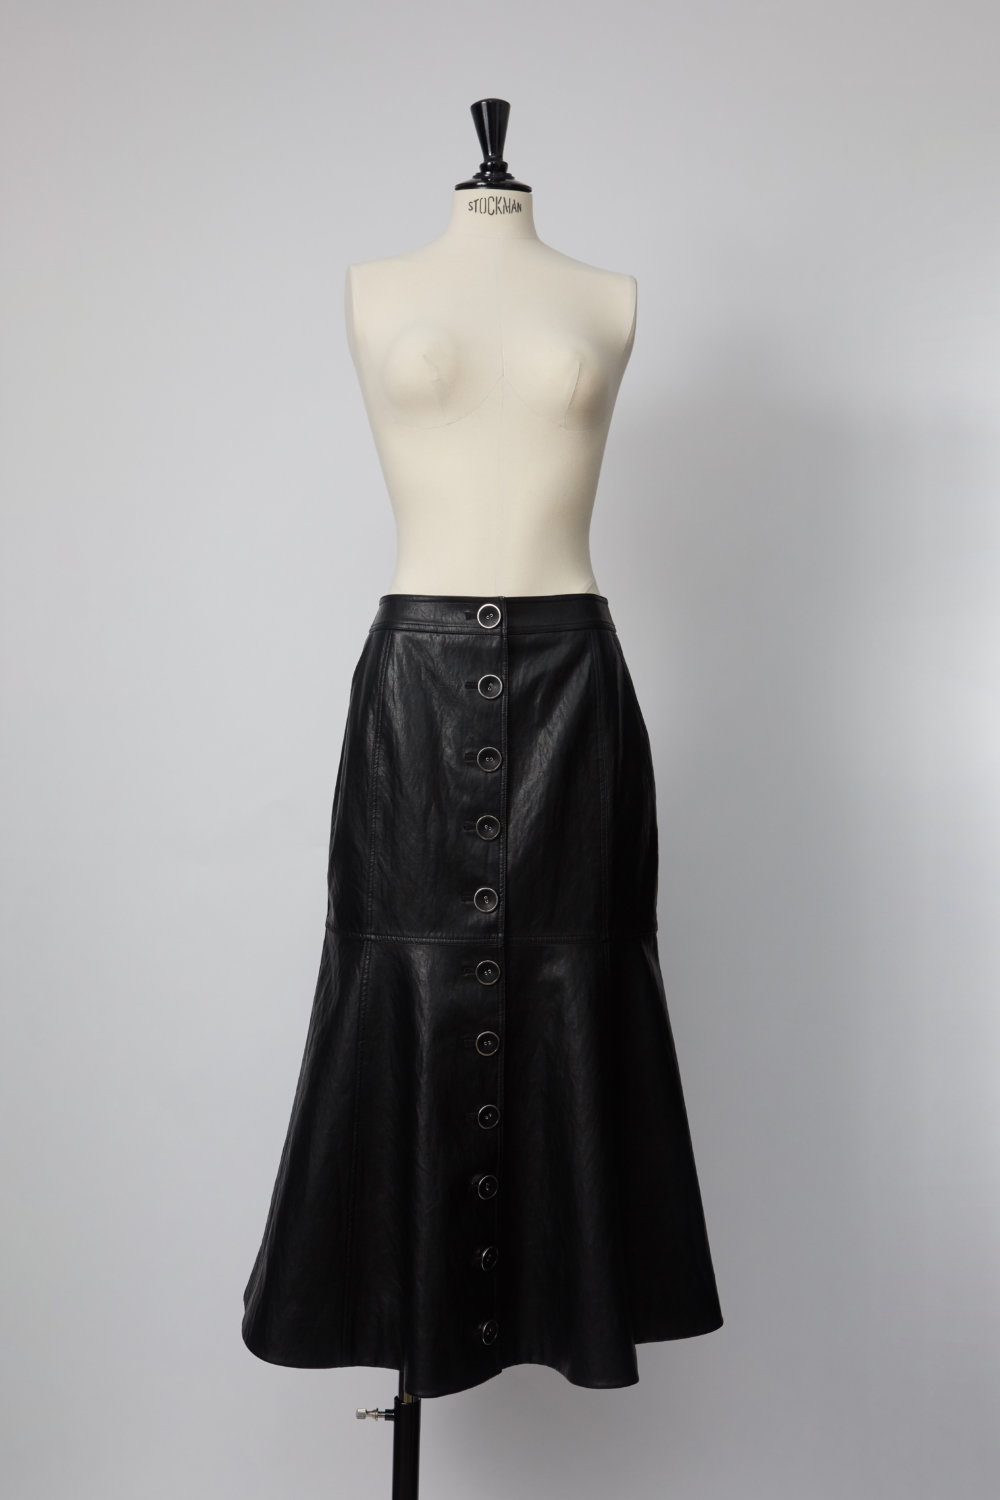 PS22 Neo Emma Bell Skirt